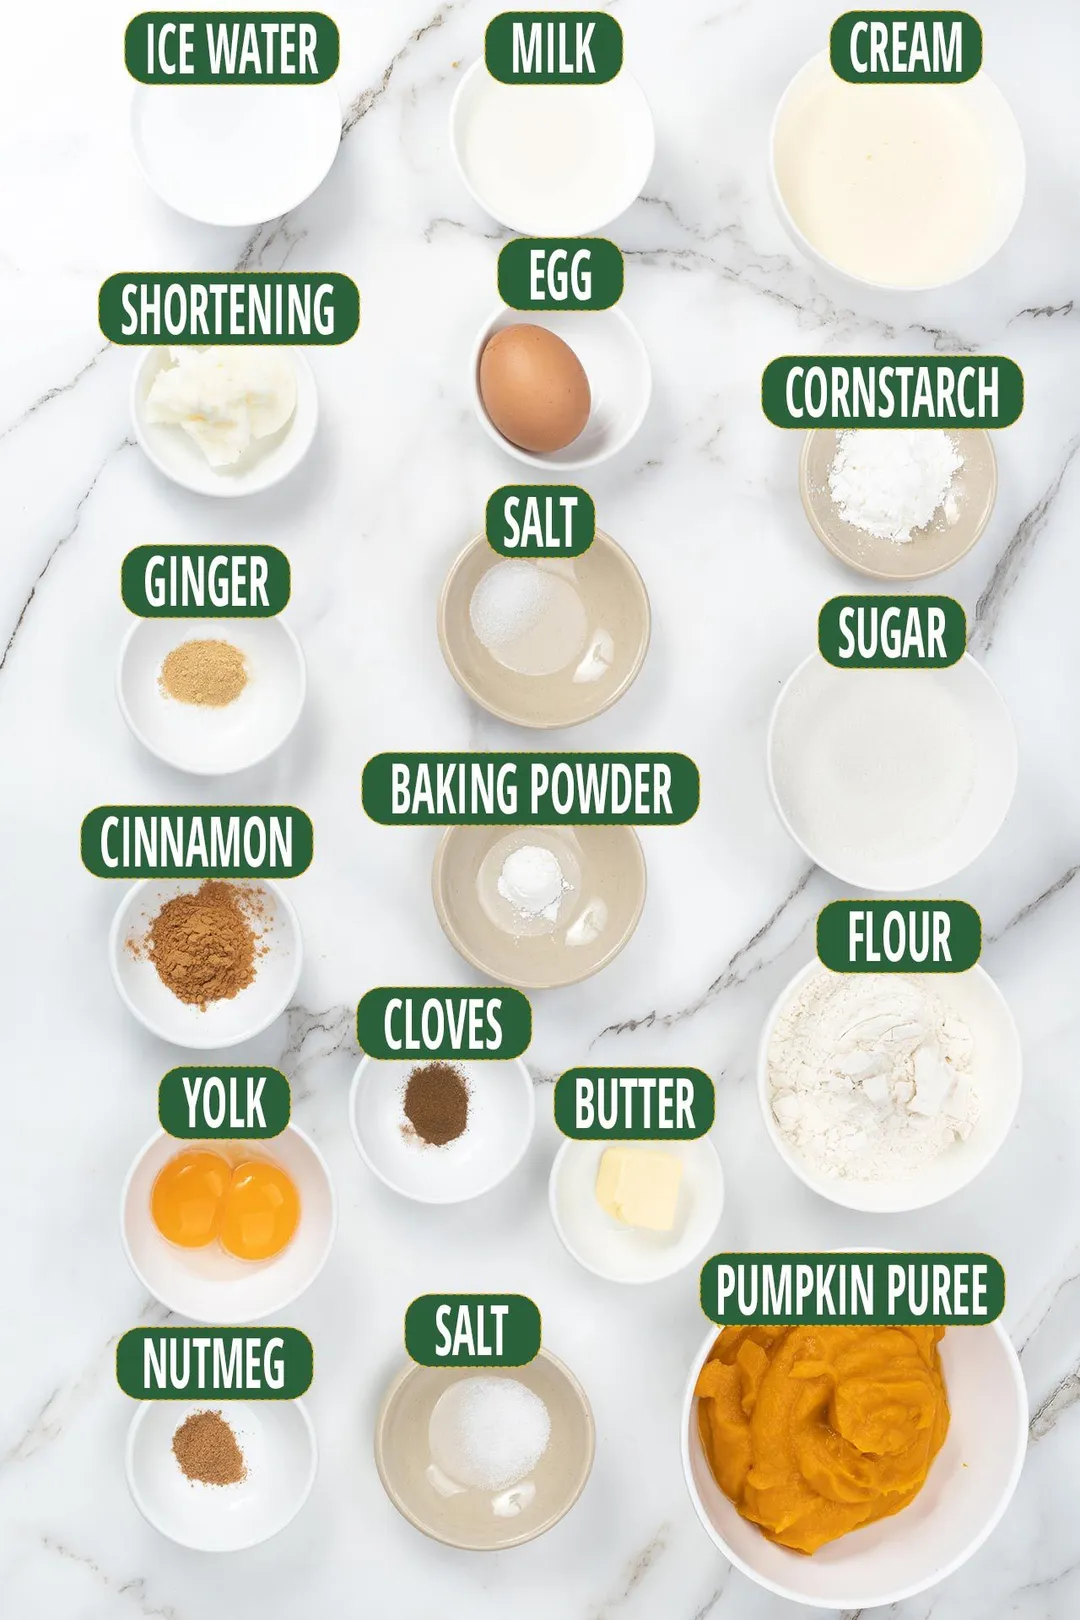 Ingredients for Pumpkin Pie, including pumpkin puree, egg yolks, flour, and other baking essentials.